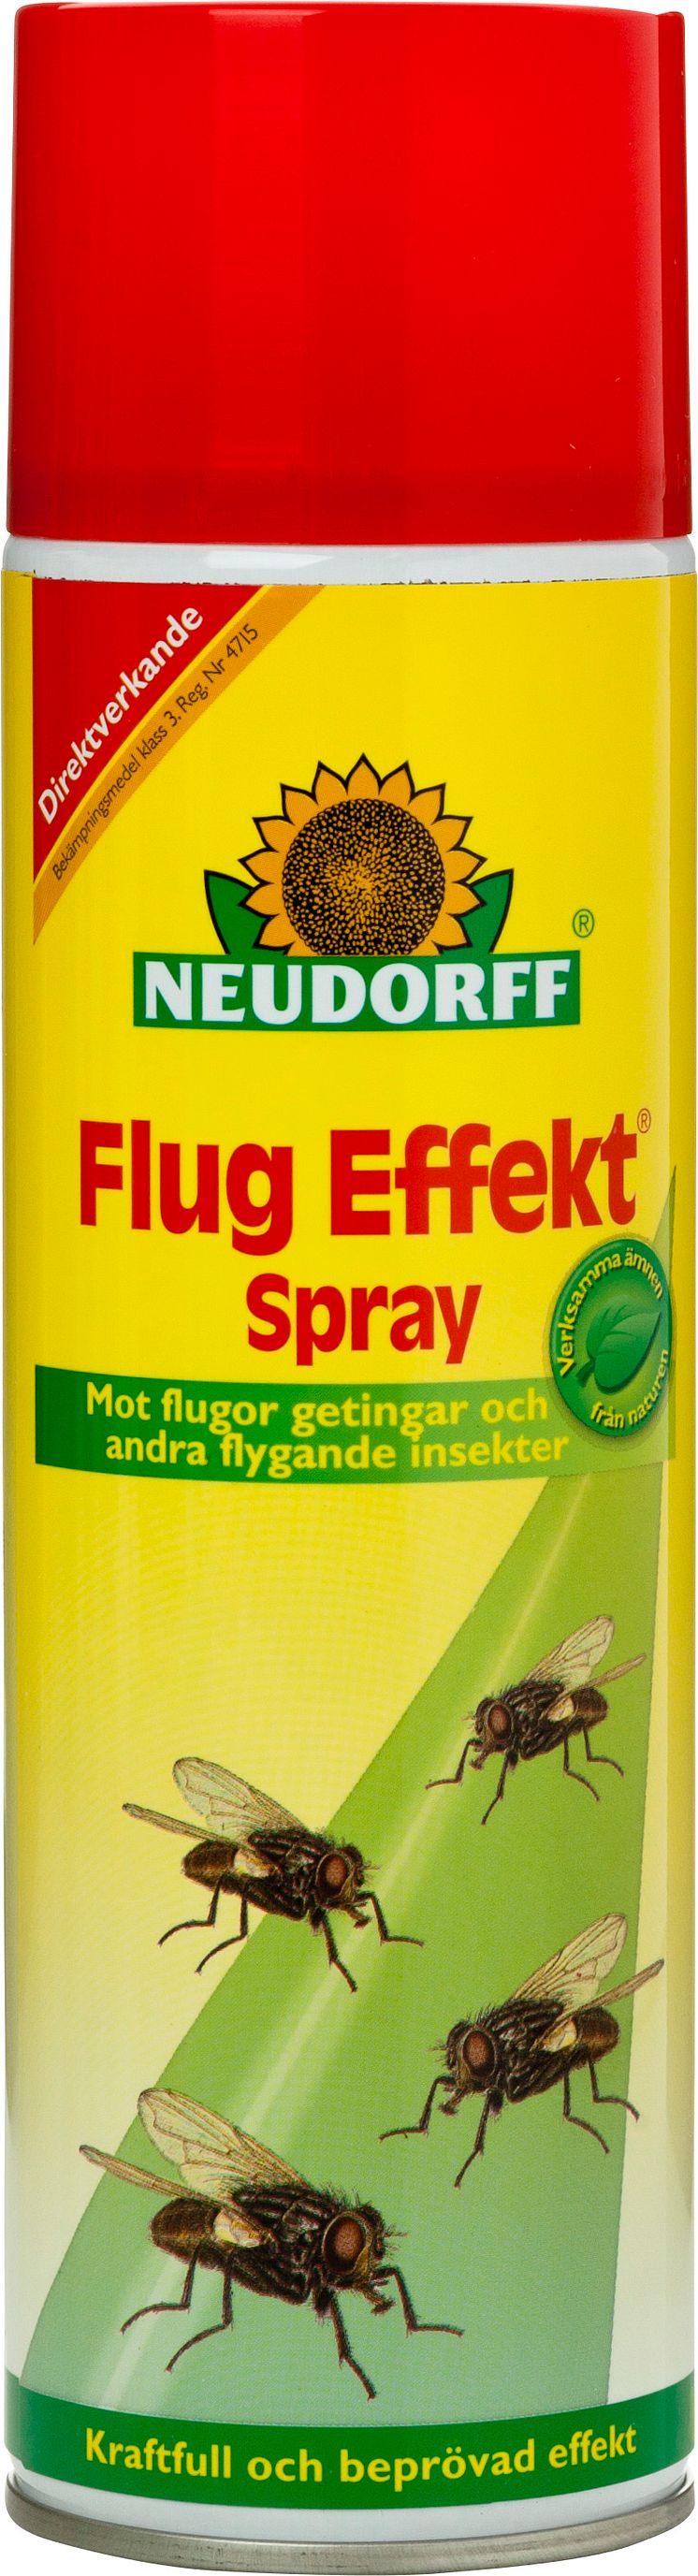 Flug Effekt Spray 500ml - Neudorff